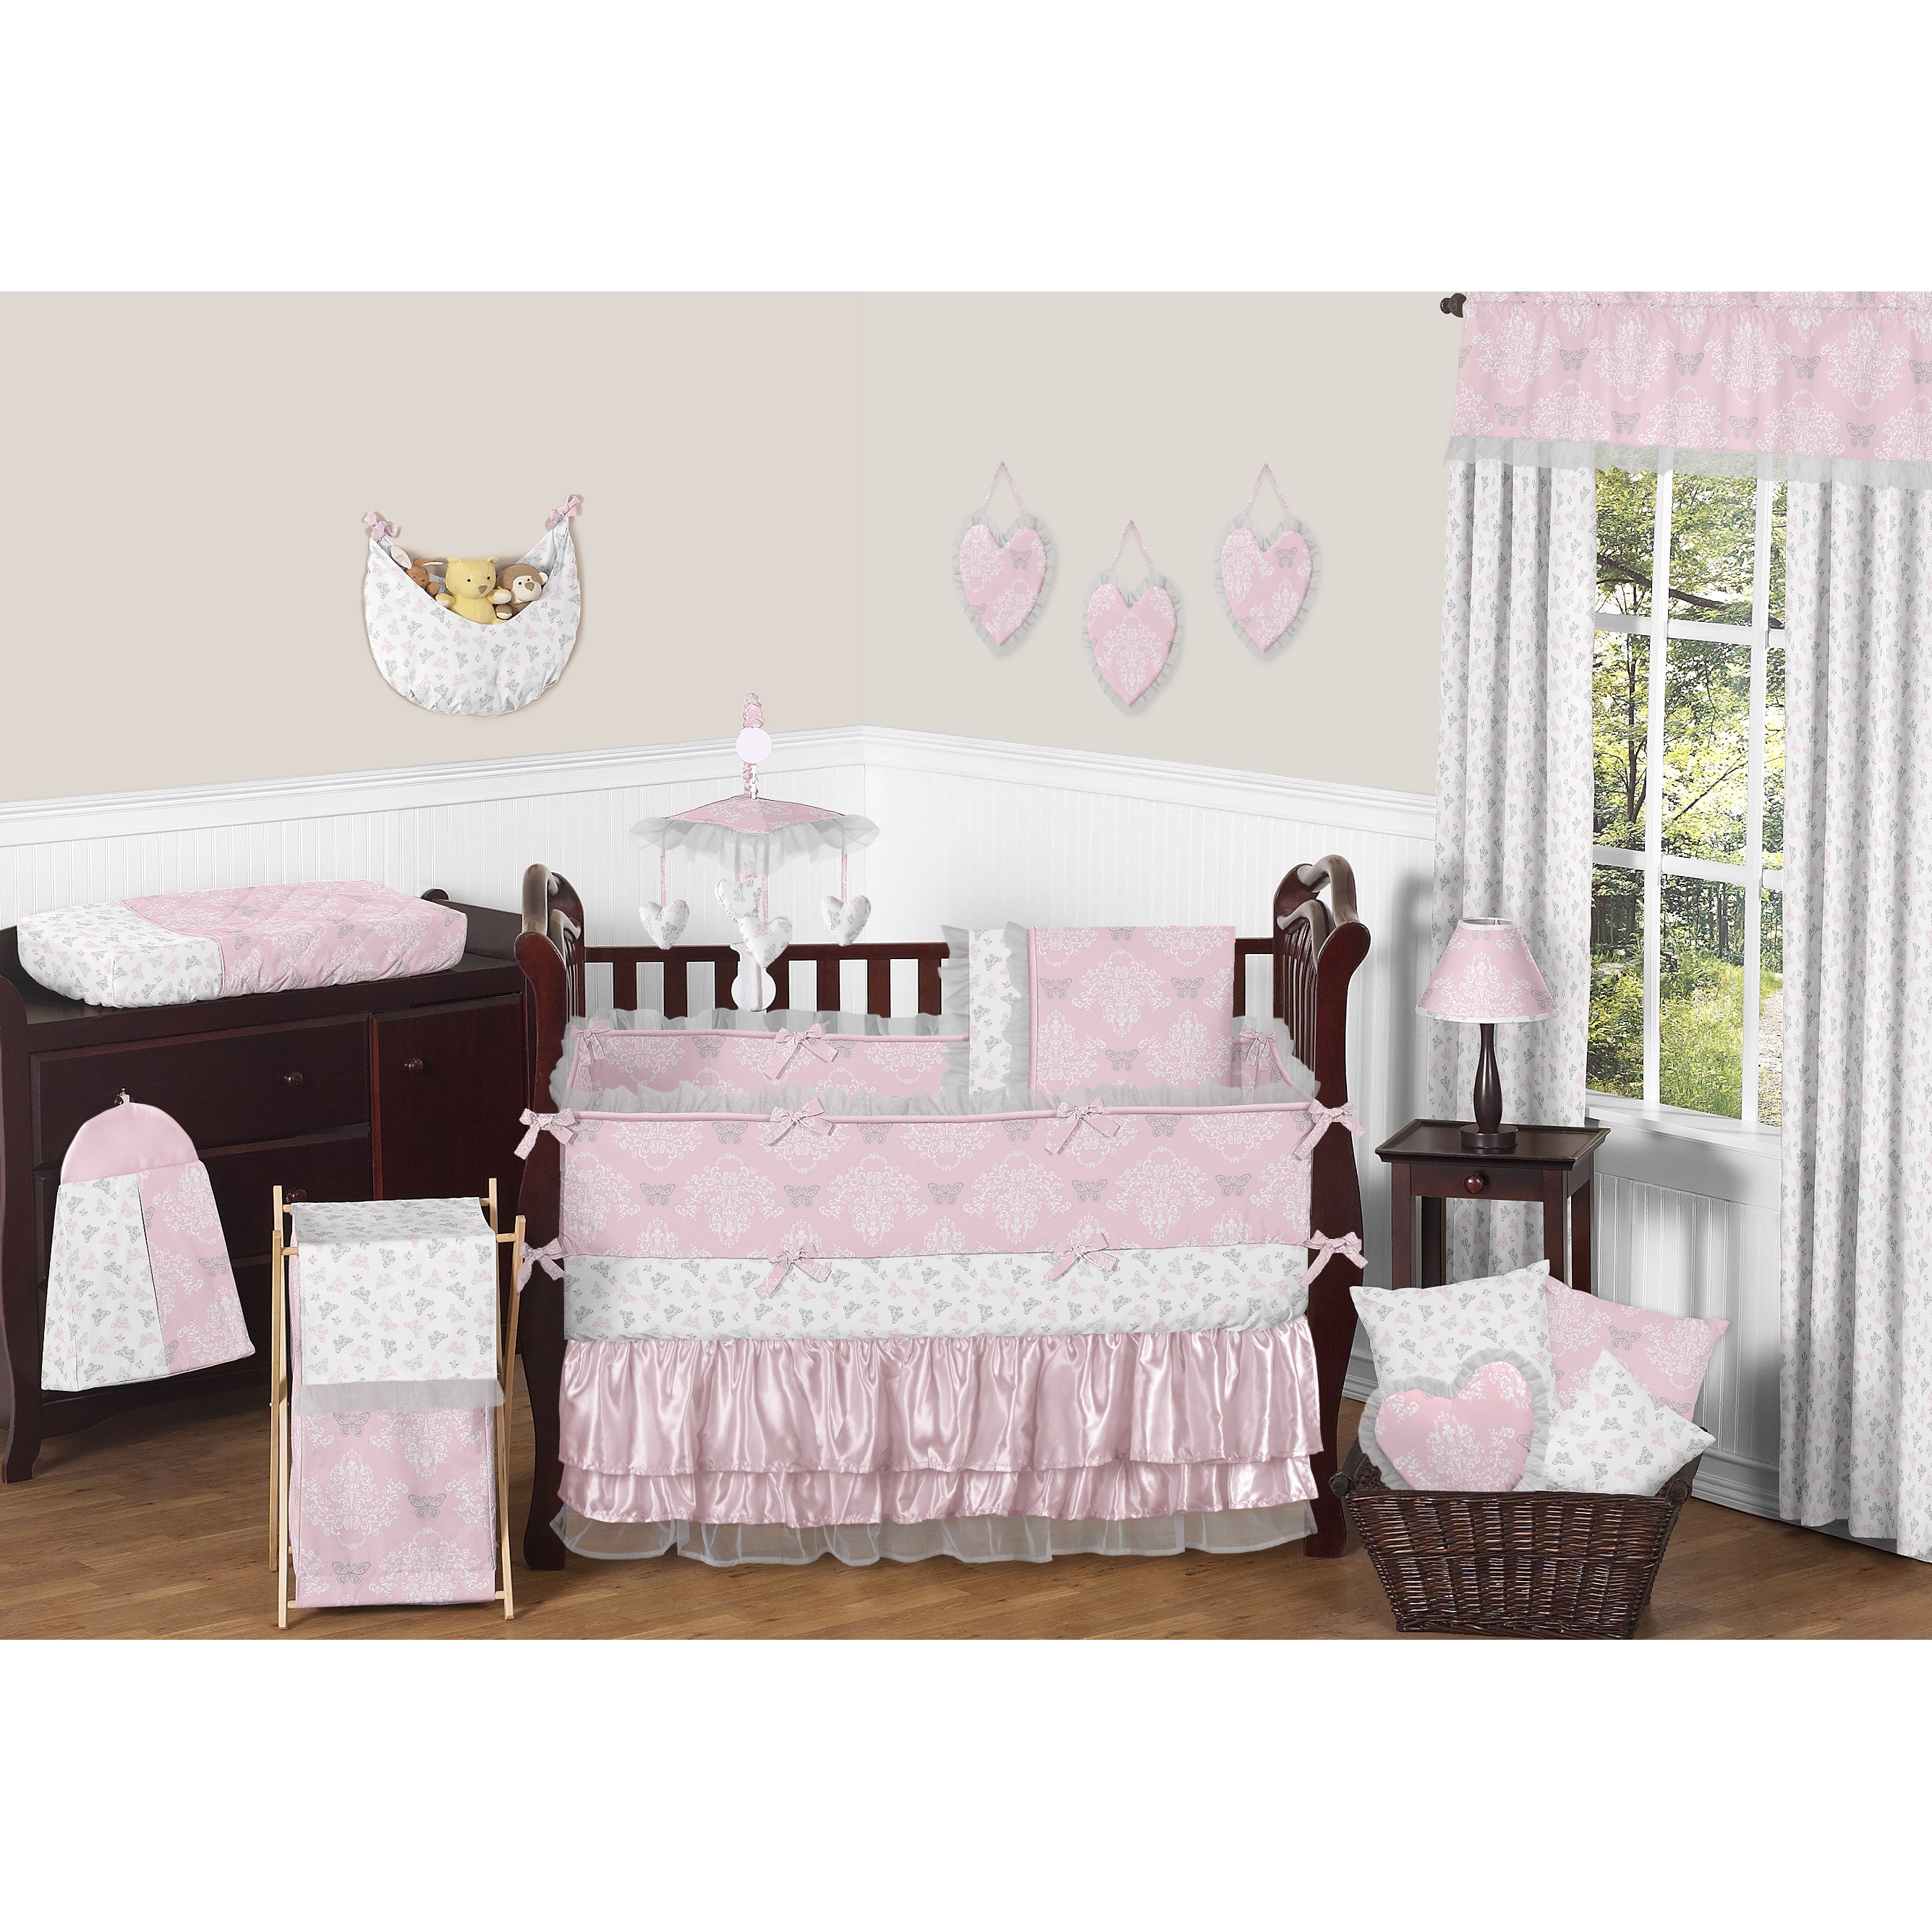 satin crib bedding sets